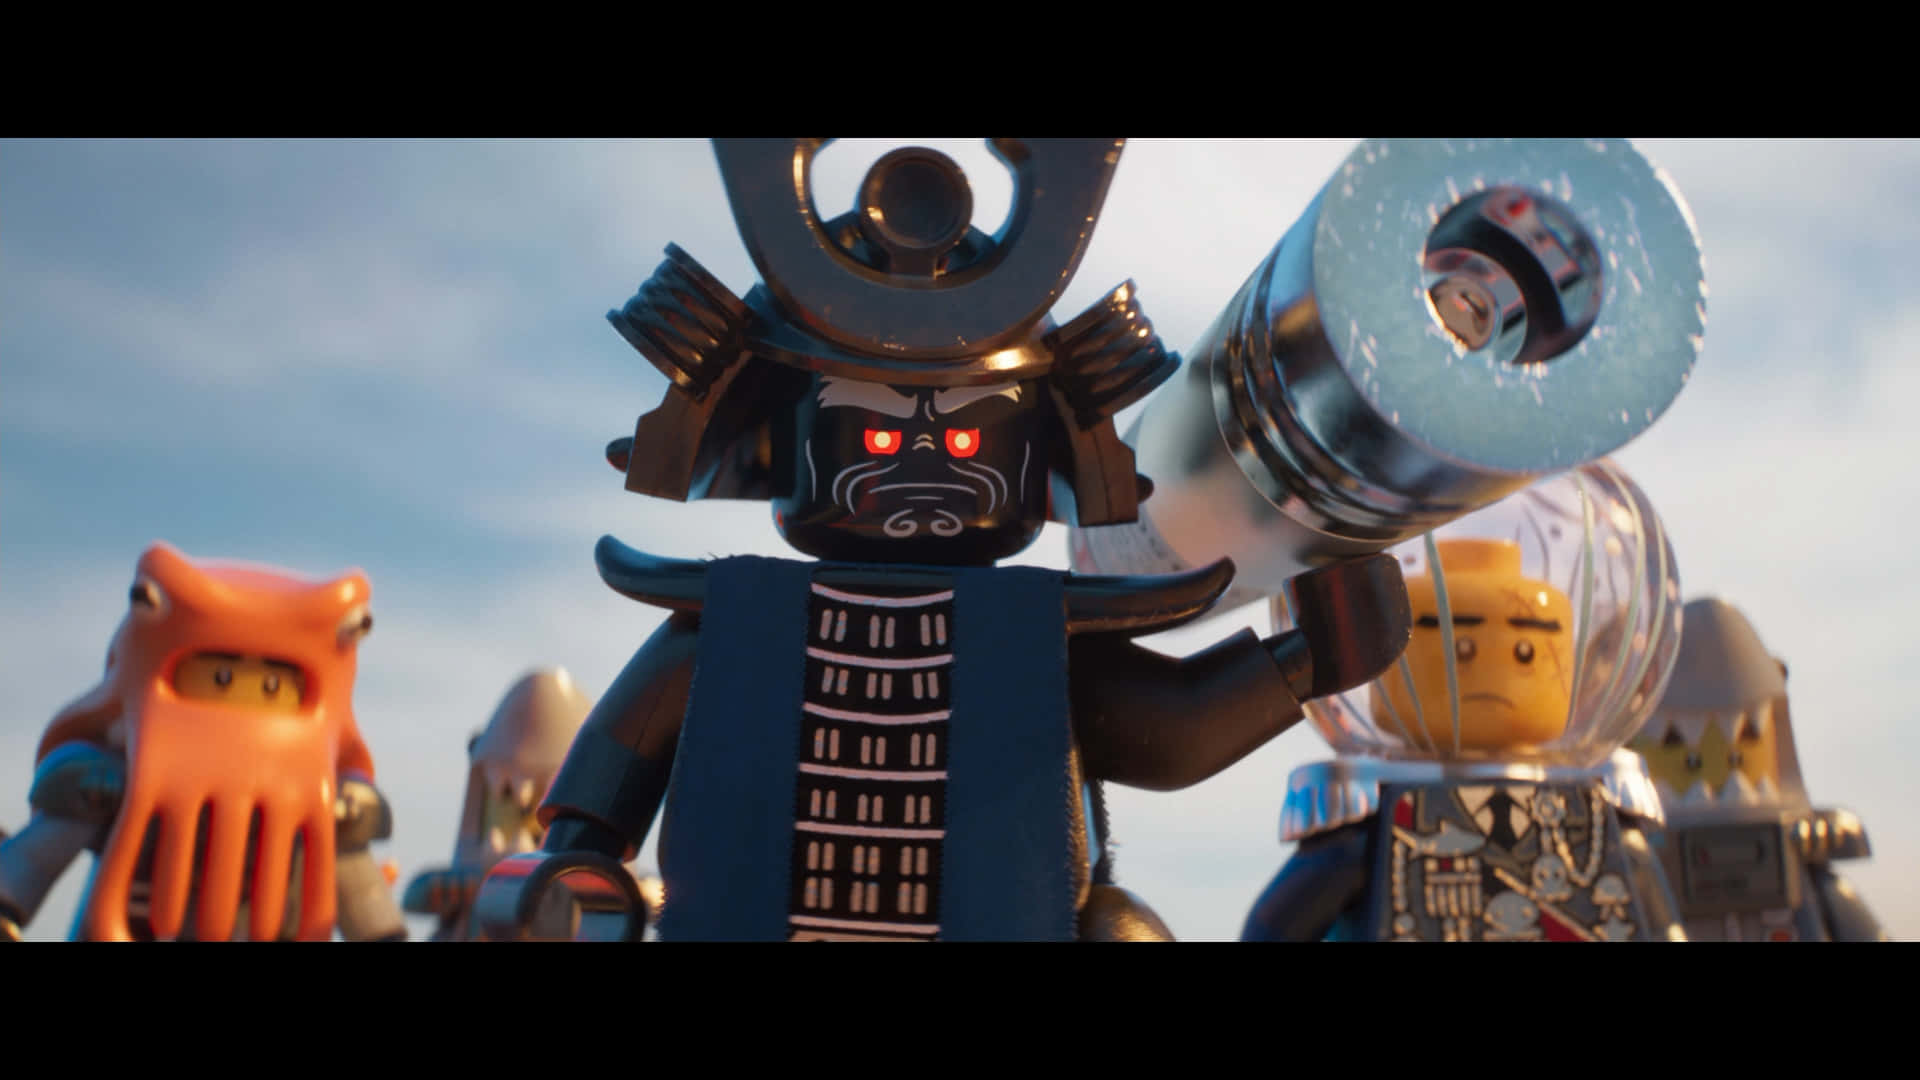 Lord Garmadon Holding Bazooka The Lego Ninjago Movie Wallpaper